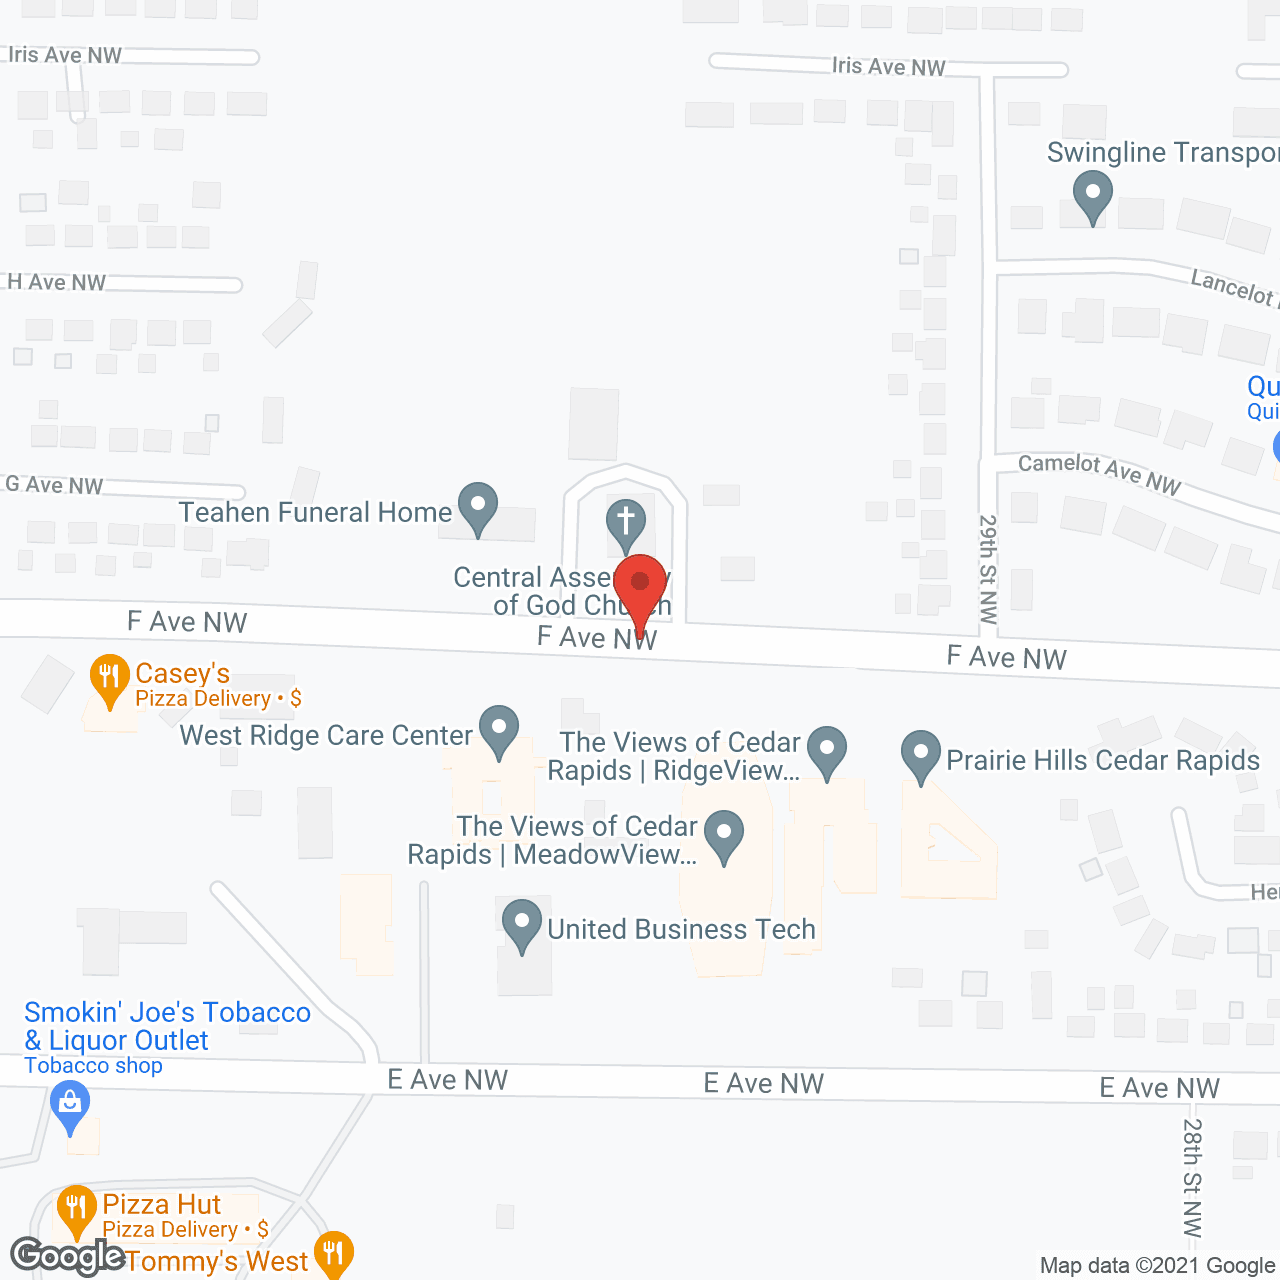 Prairie Hills at Cedar Rapids in google map